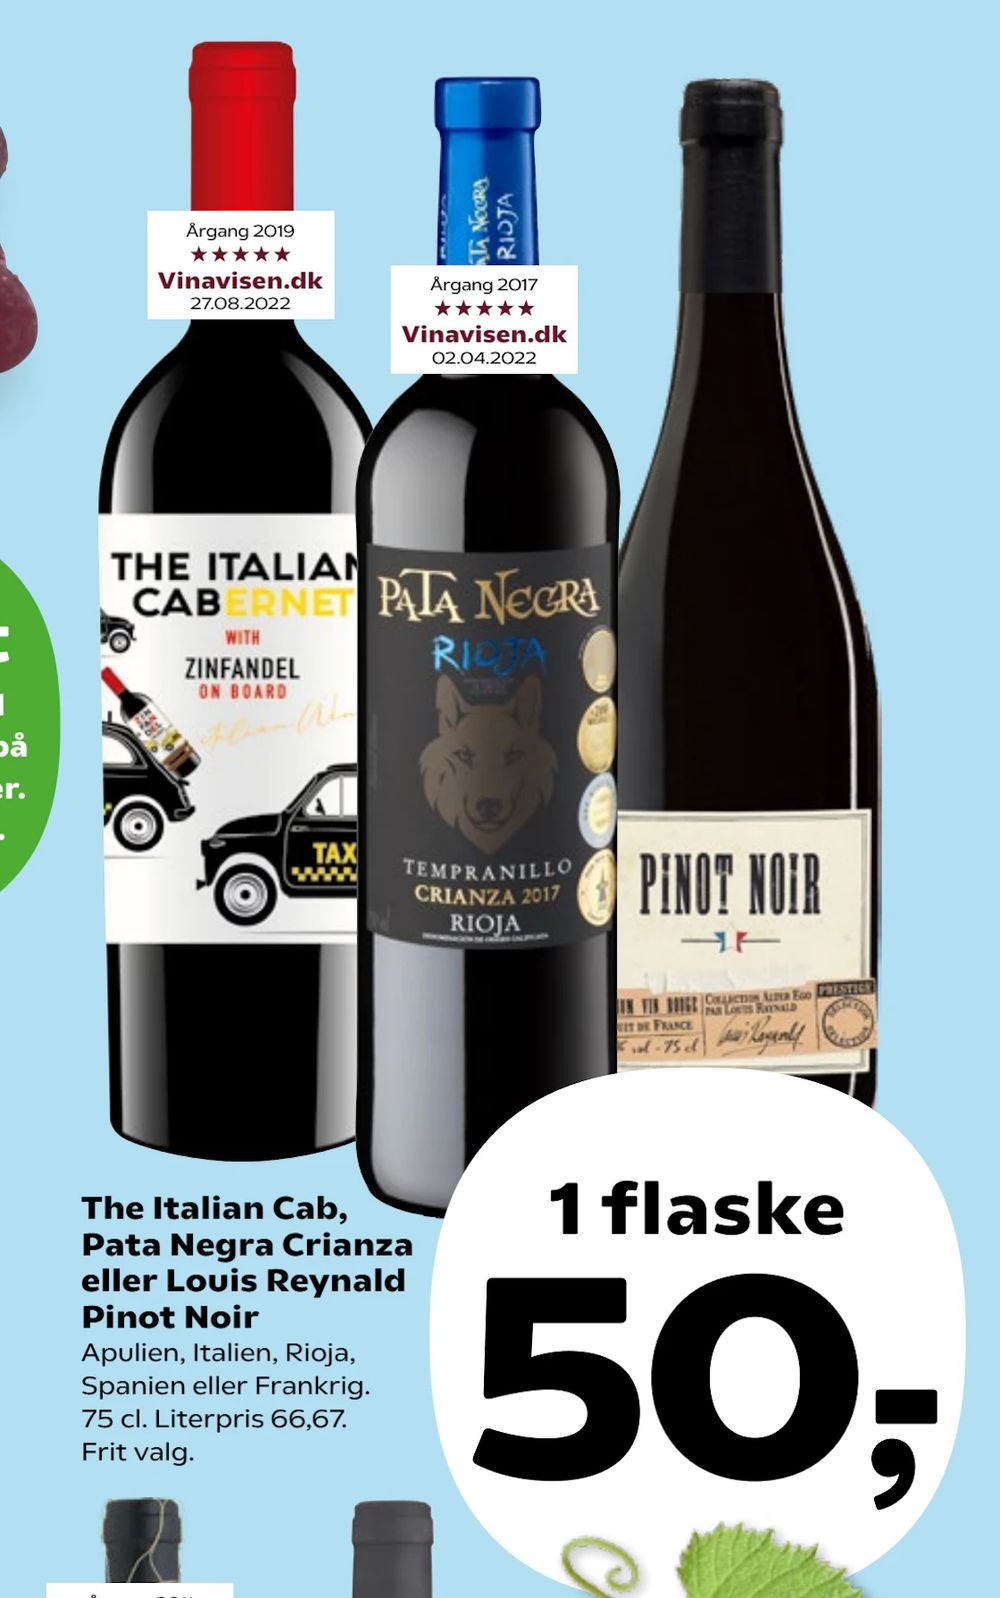 Tilbud på The Italian Cab, Pata Negra Crianza eller Louis Reynald Pinot Noir fra SuperBrugsen til 50 kr.